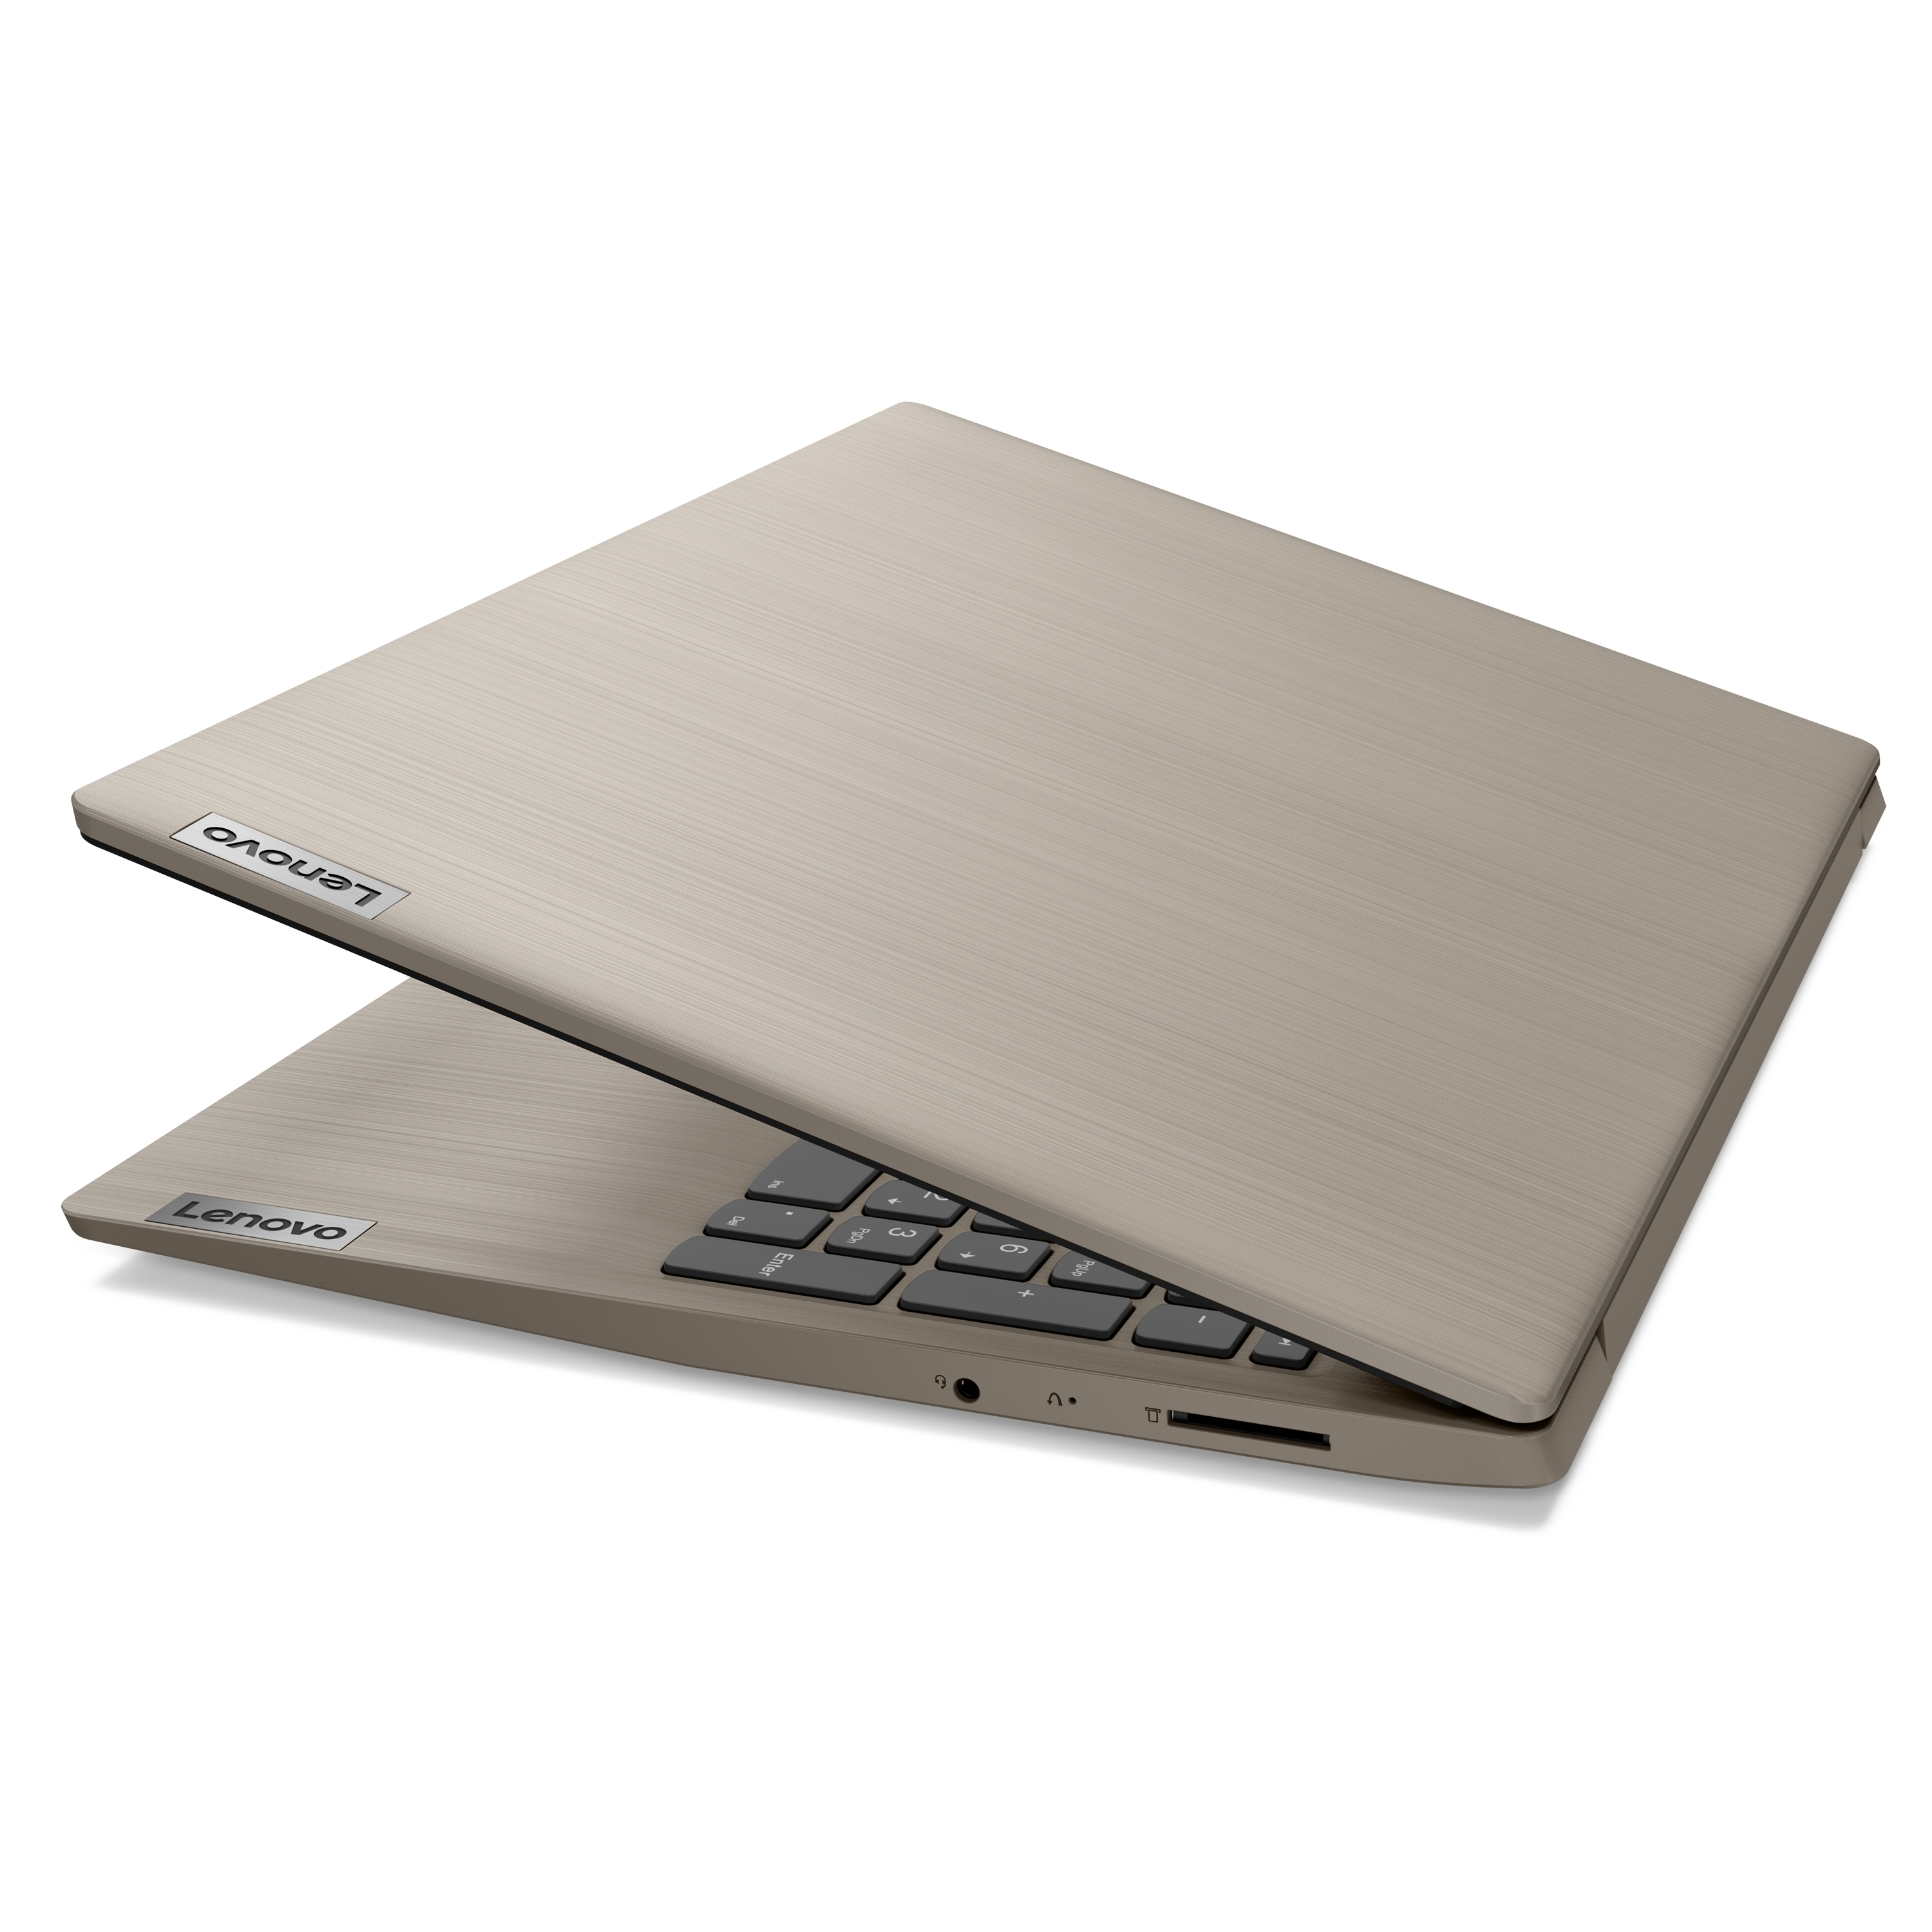 Lenovo IdeaPad 3 15.6" PC Laptop, Intel Core i3-1005G1, 4GB RAM, 128GB SSD, Windows 10, Almond, 81WE0016US - image 5 of 15